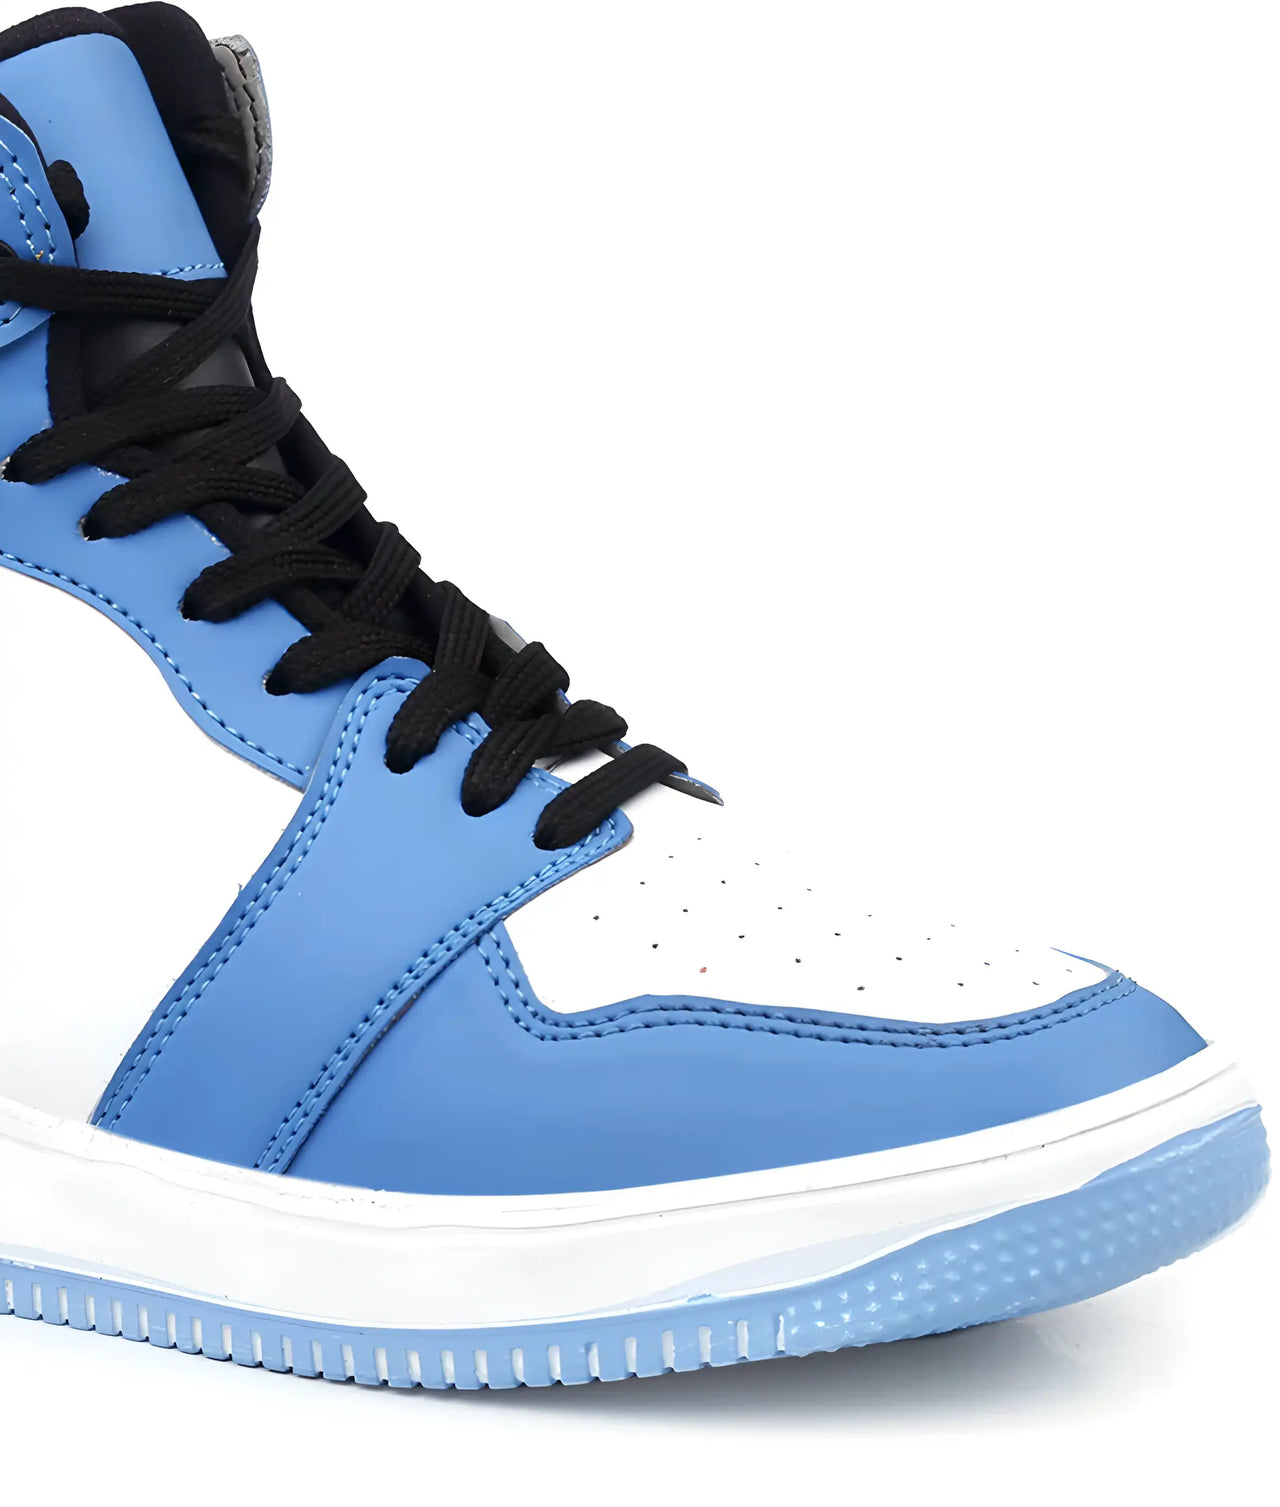 Woakers Blue Men's Casual Sneakers